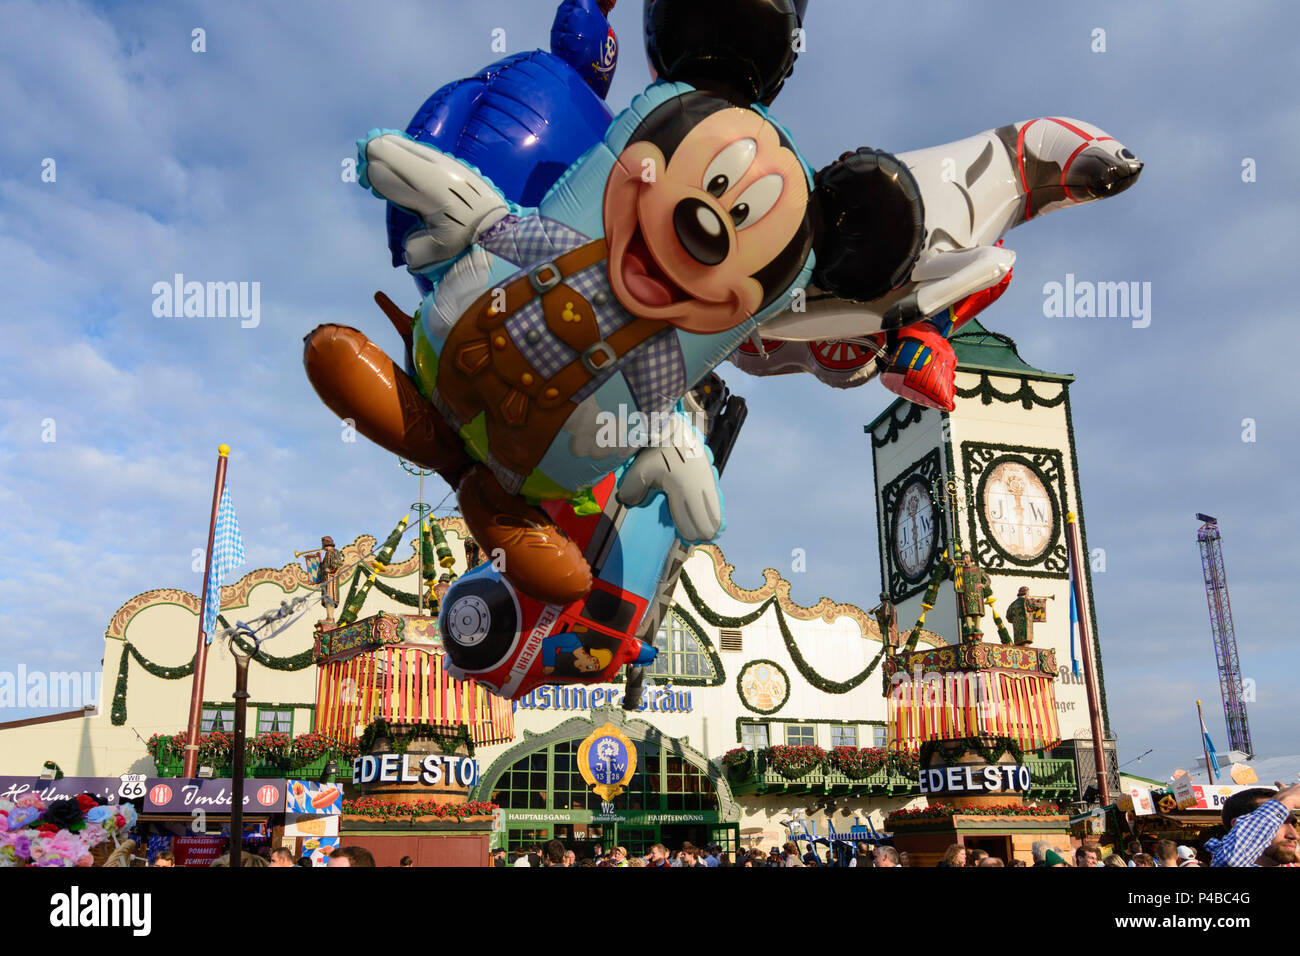 Hovering Mickey Mouse Balloon Stockfotos und -bilder Kaufen - Alamy